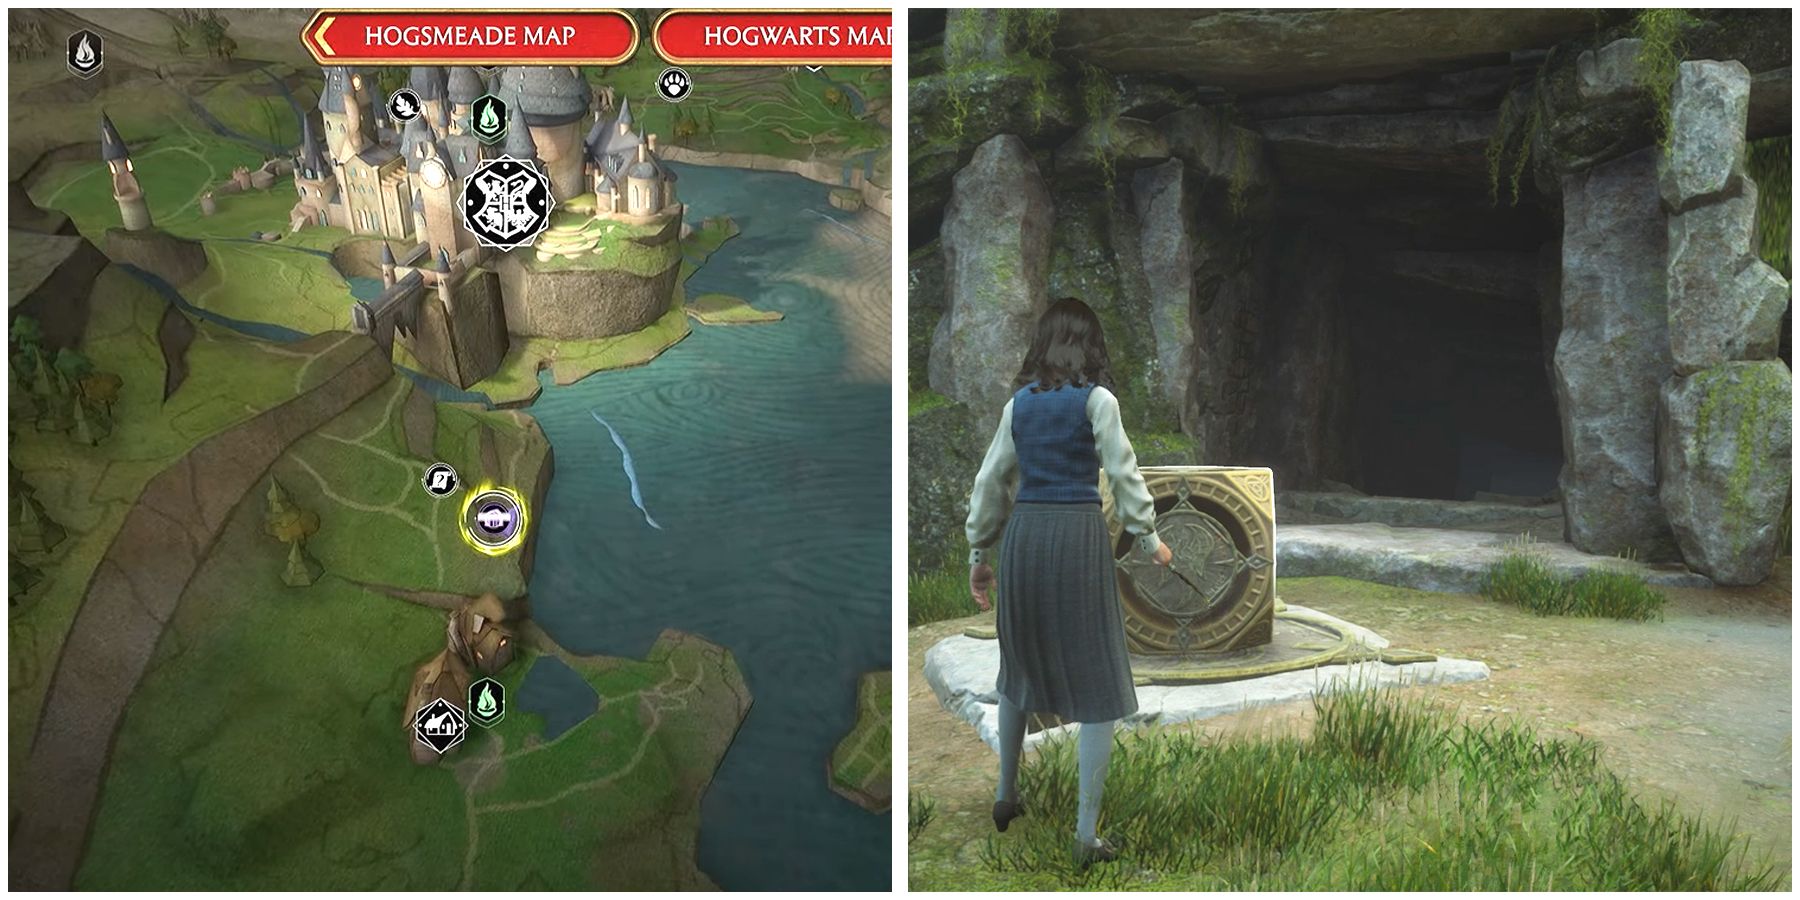 south hogwarts treasure vault 2 location in hogwarts legacy